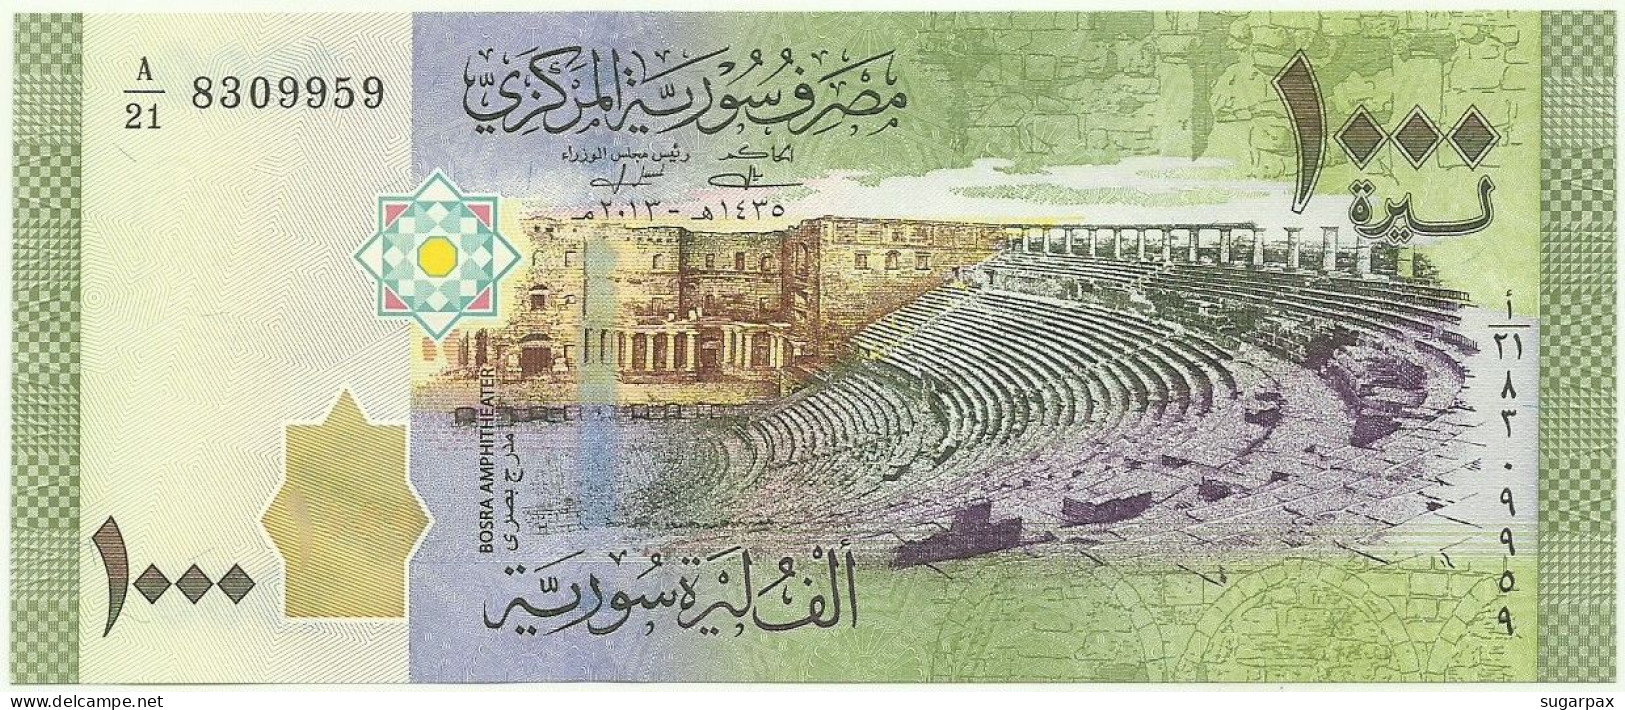 Syria - 1000 Syrian Pounds - 2013 / AH 1434 - Pick 116 - Unc. - Serie A/21 - 1.000 - Syrië